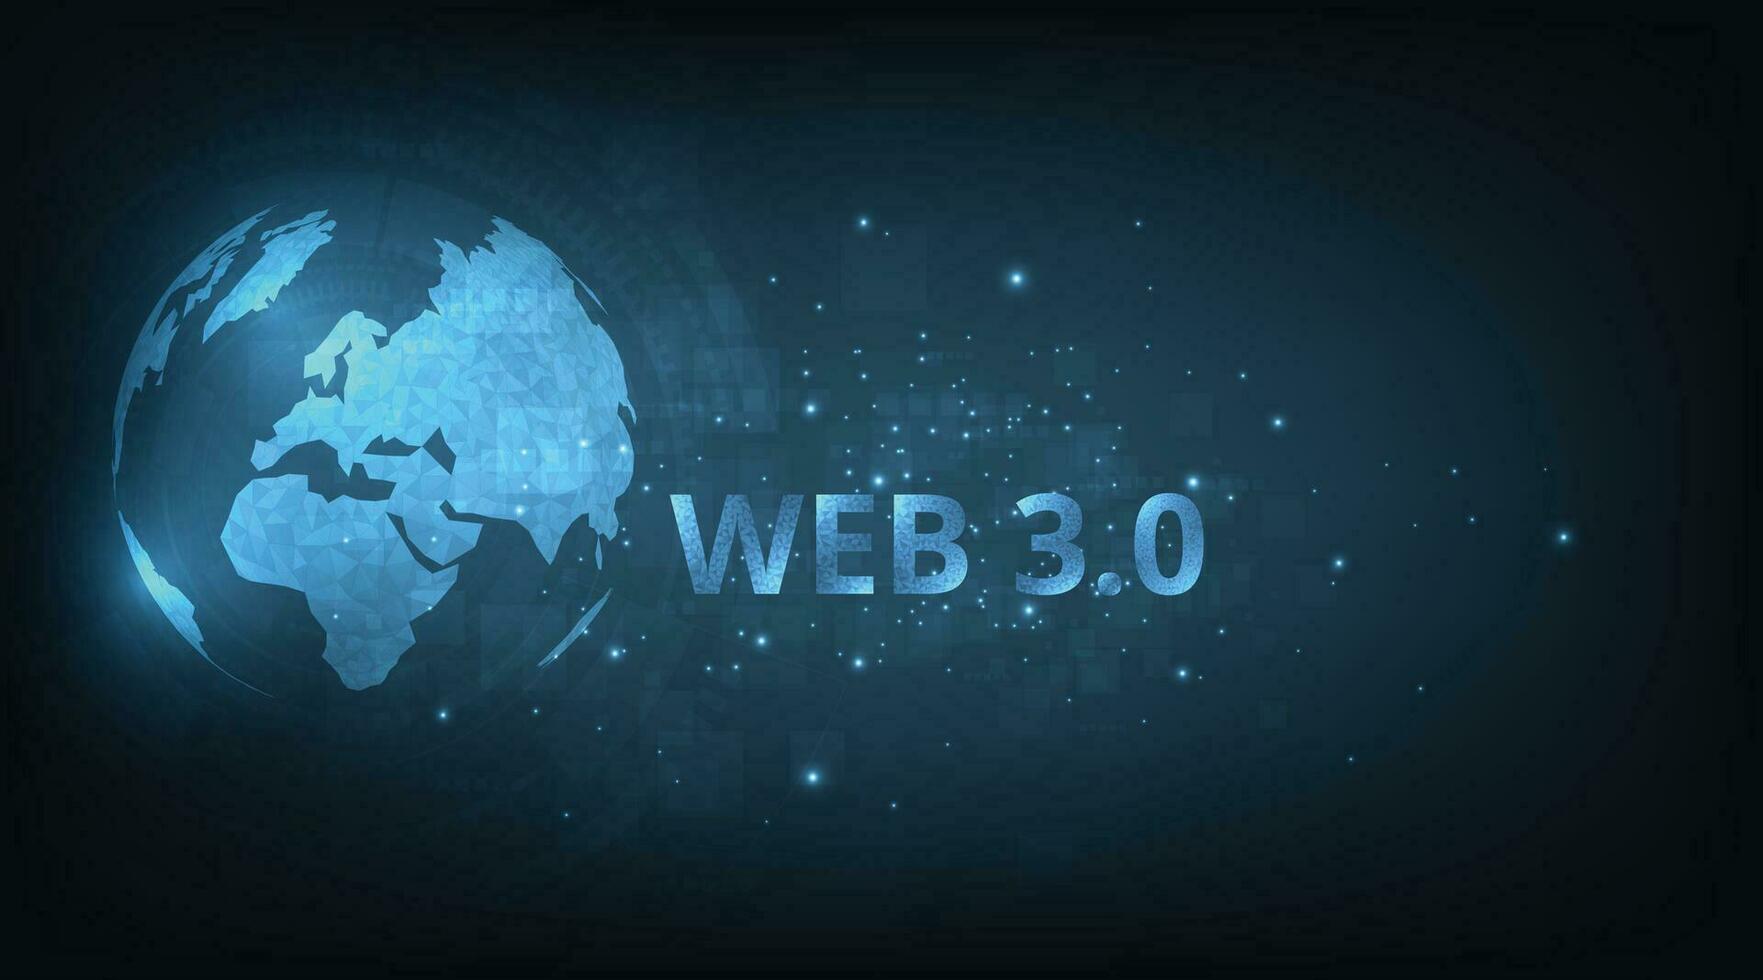 webb 3.0 text på blå teknologi bakgrund. vektor